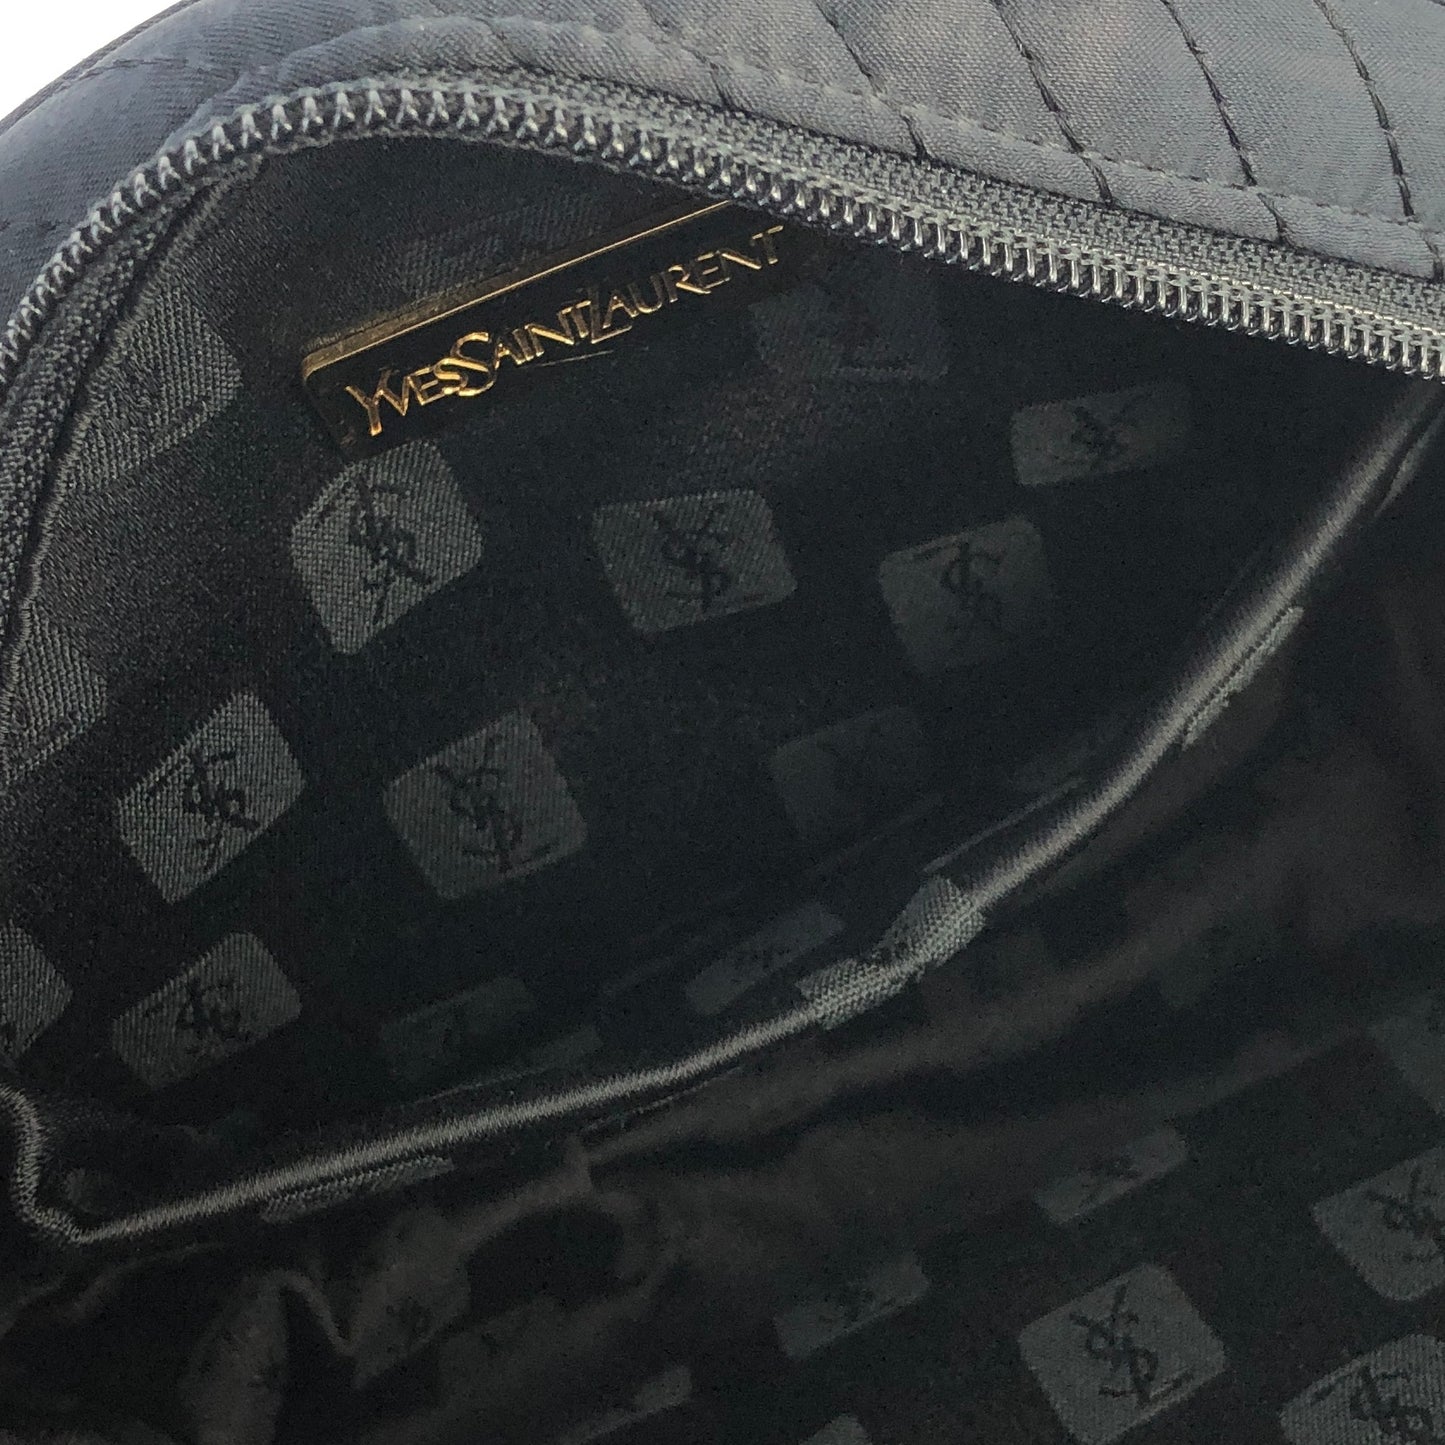 Yves Saint Laurent YSL Logo  Nylon Leather Handbag Black Vintage wx72aw